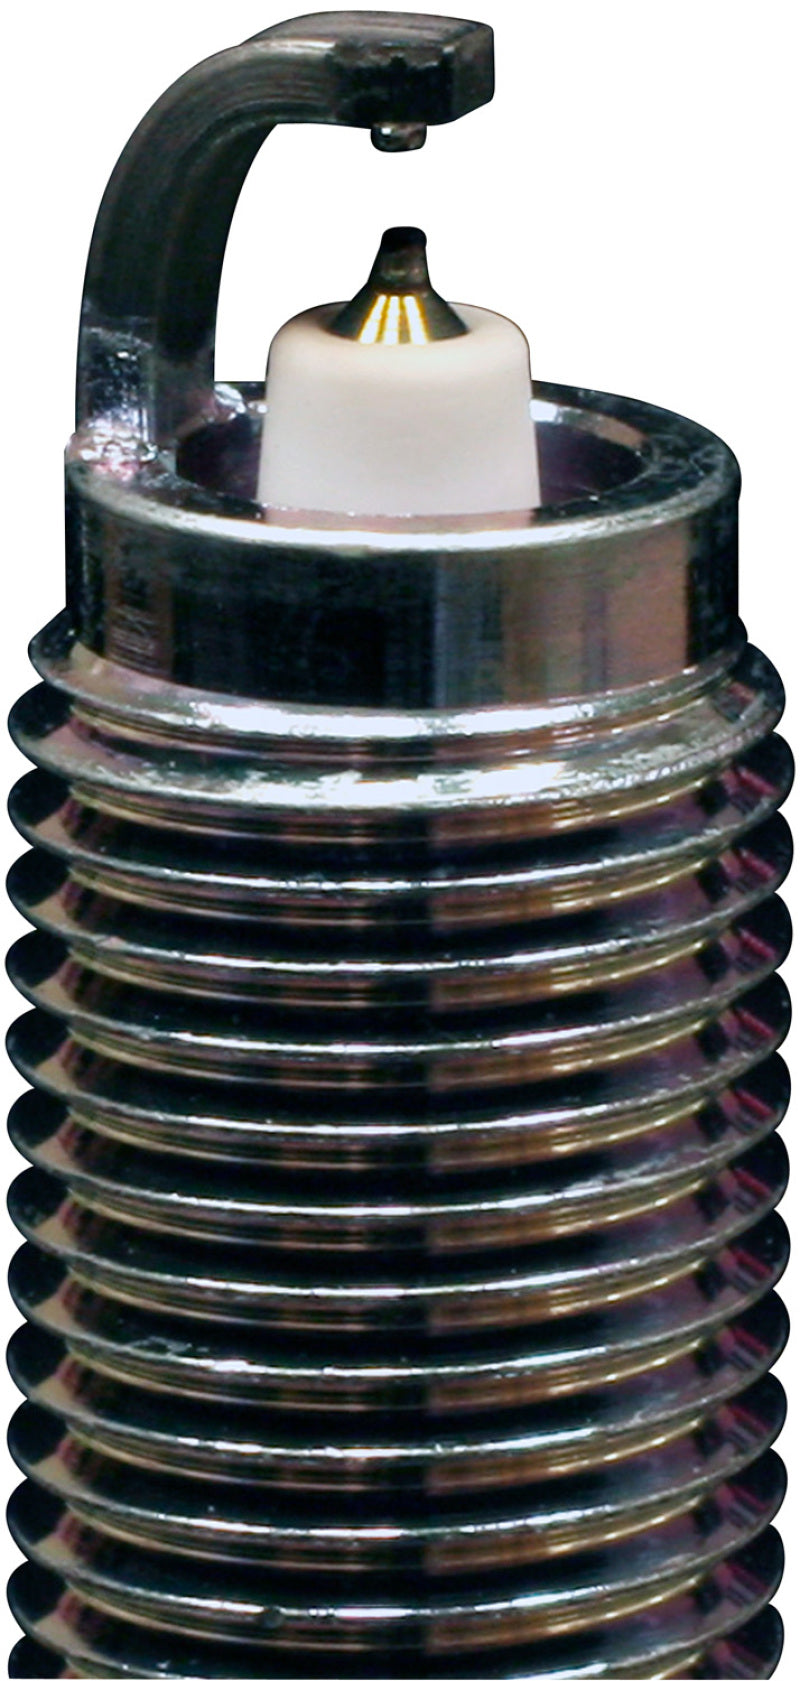 NGK Laser Iridium Spark Plug Box of 4 (DILZKAR7B11)